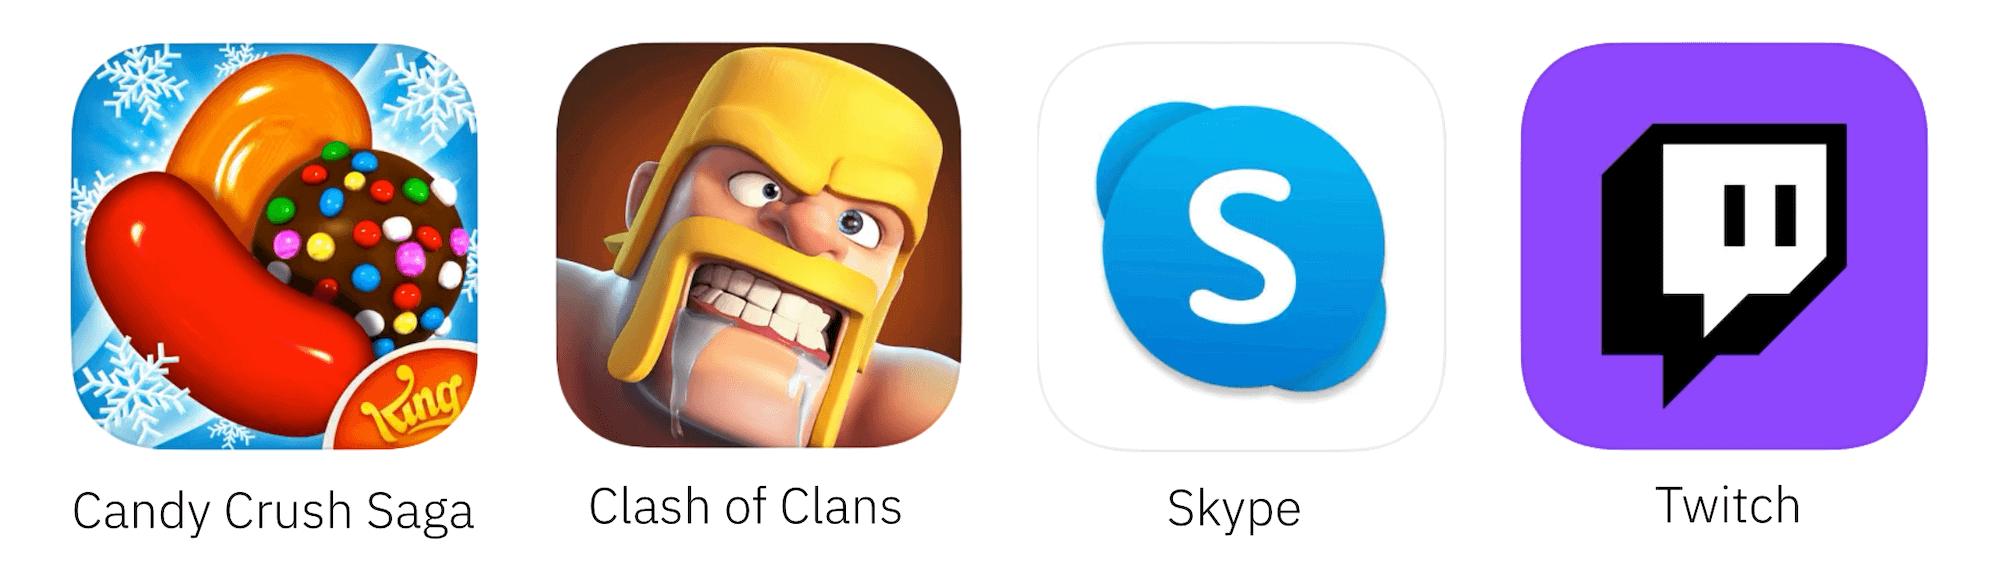 App Icons für In-App-Käufe